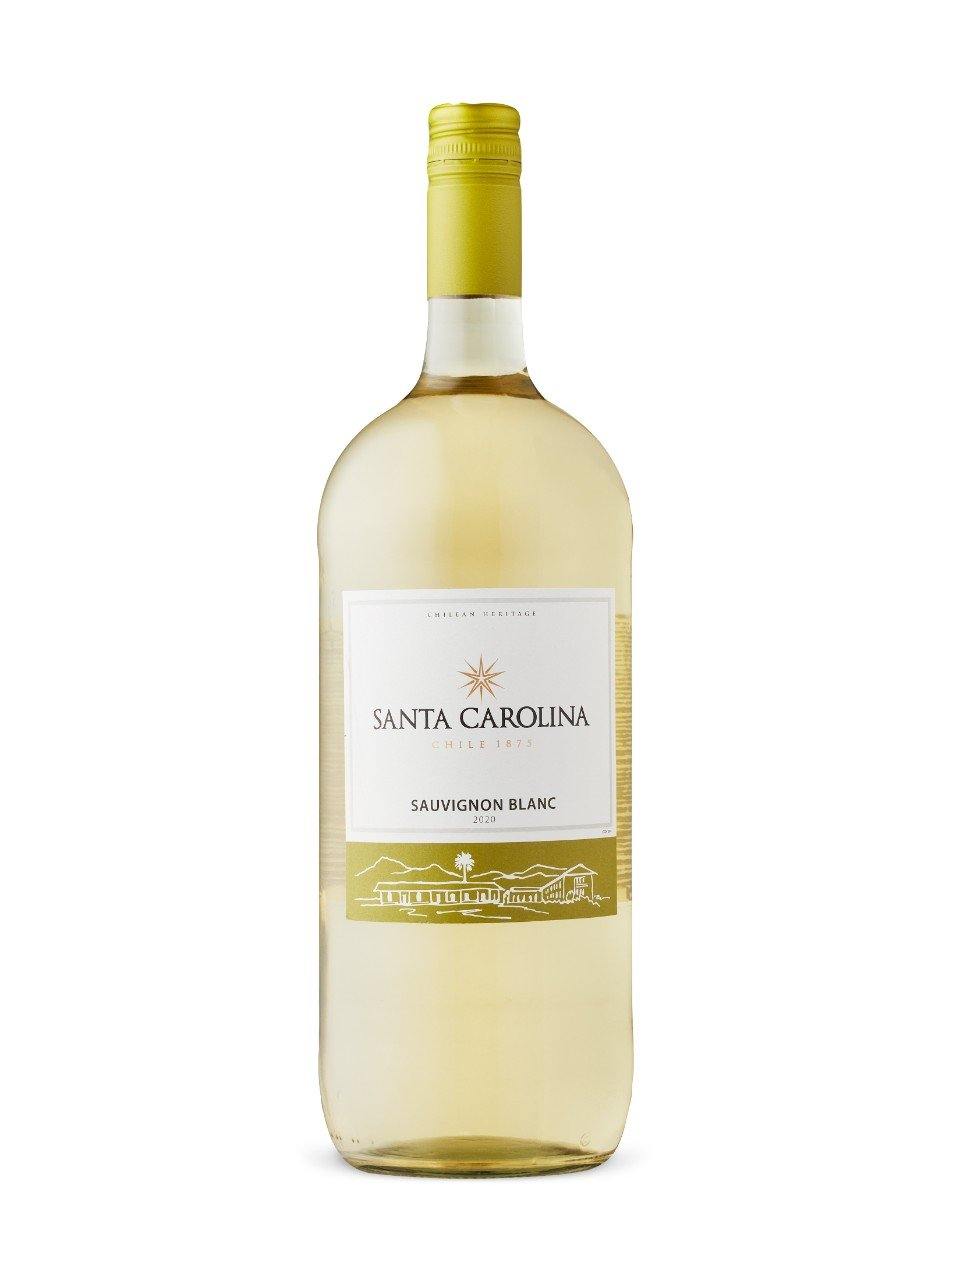 Santa Carolina Sauvignon Blanc 1500 mL bottle - Speedy Booze